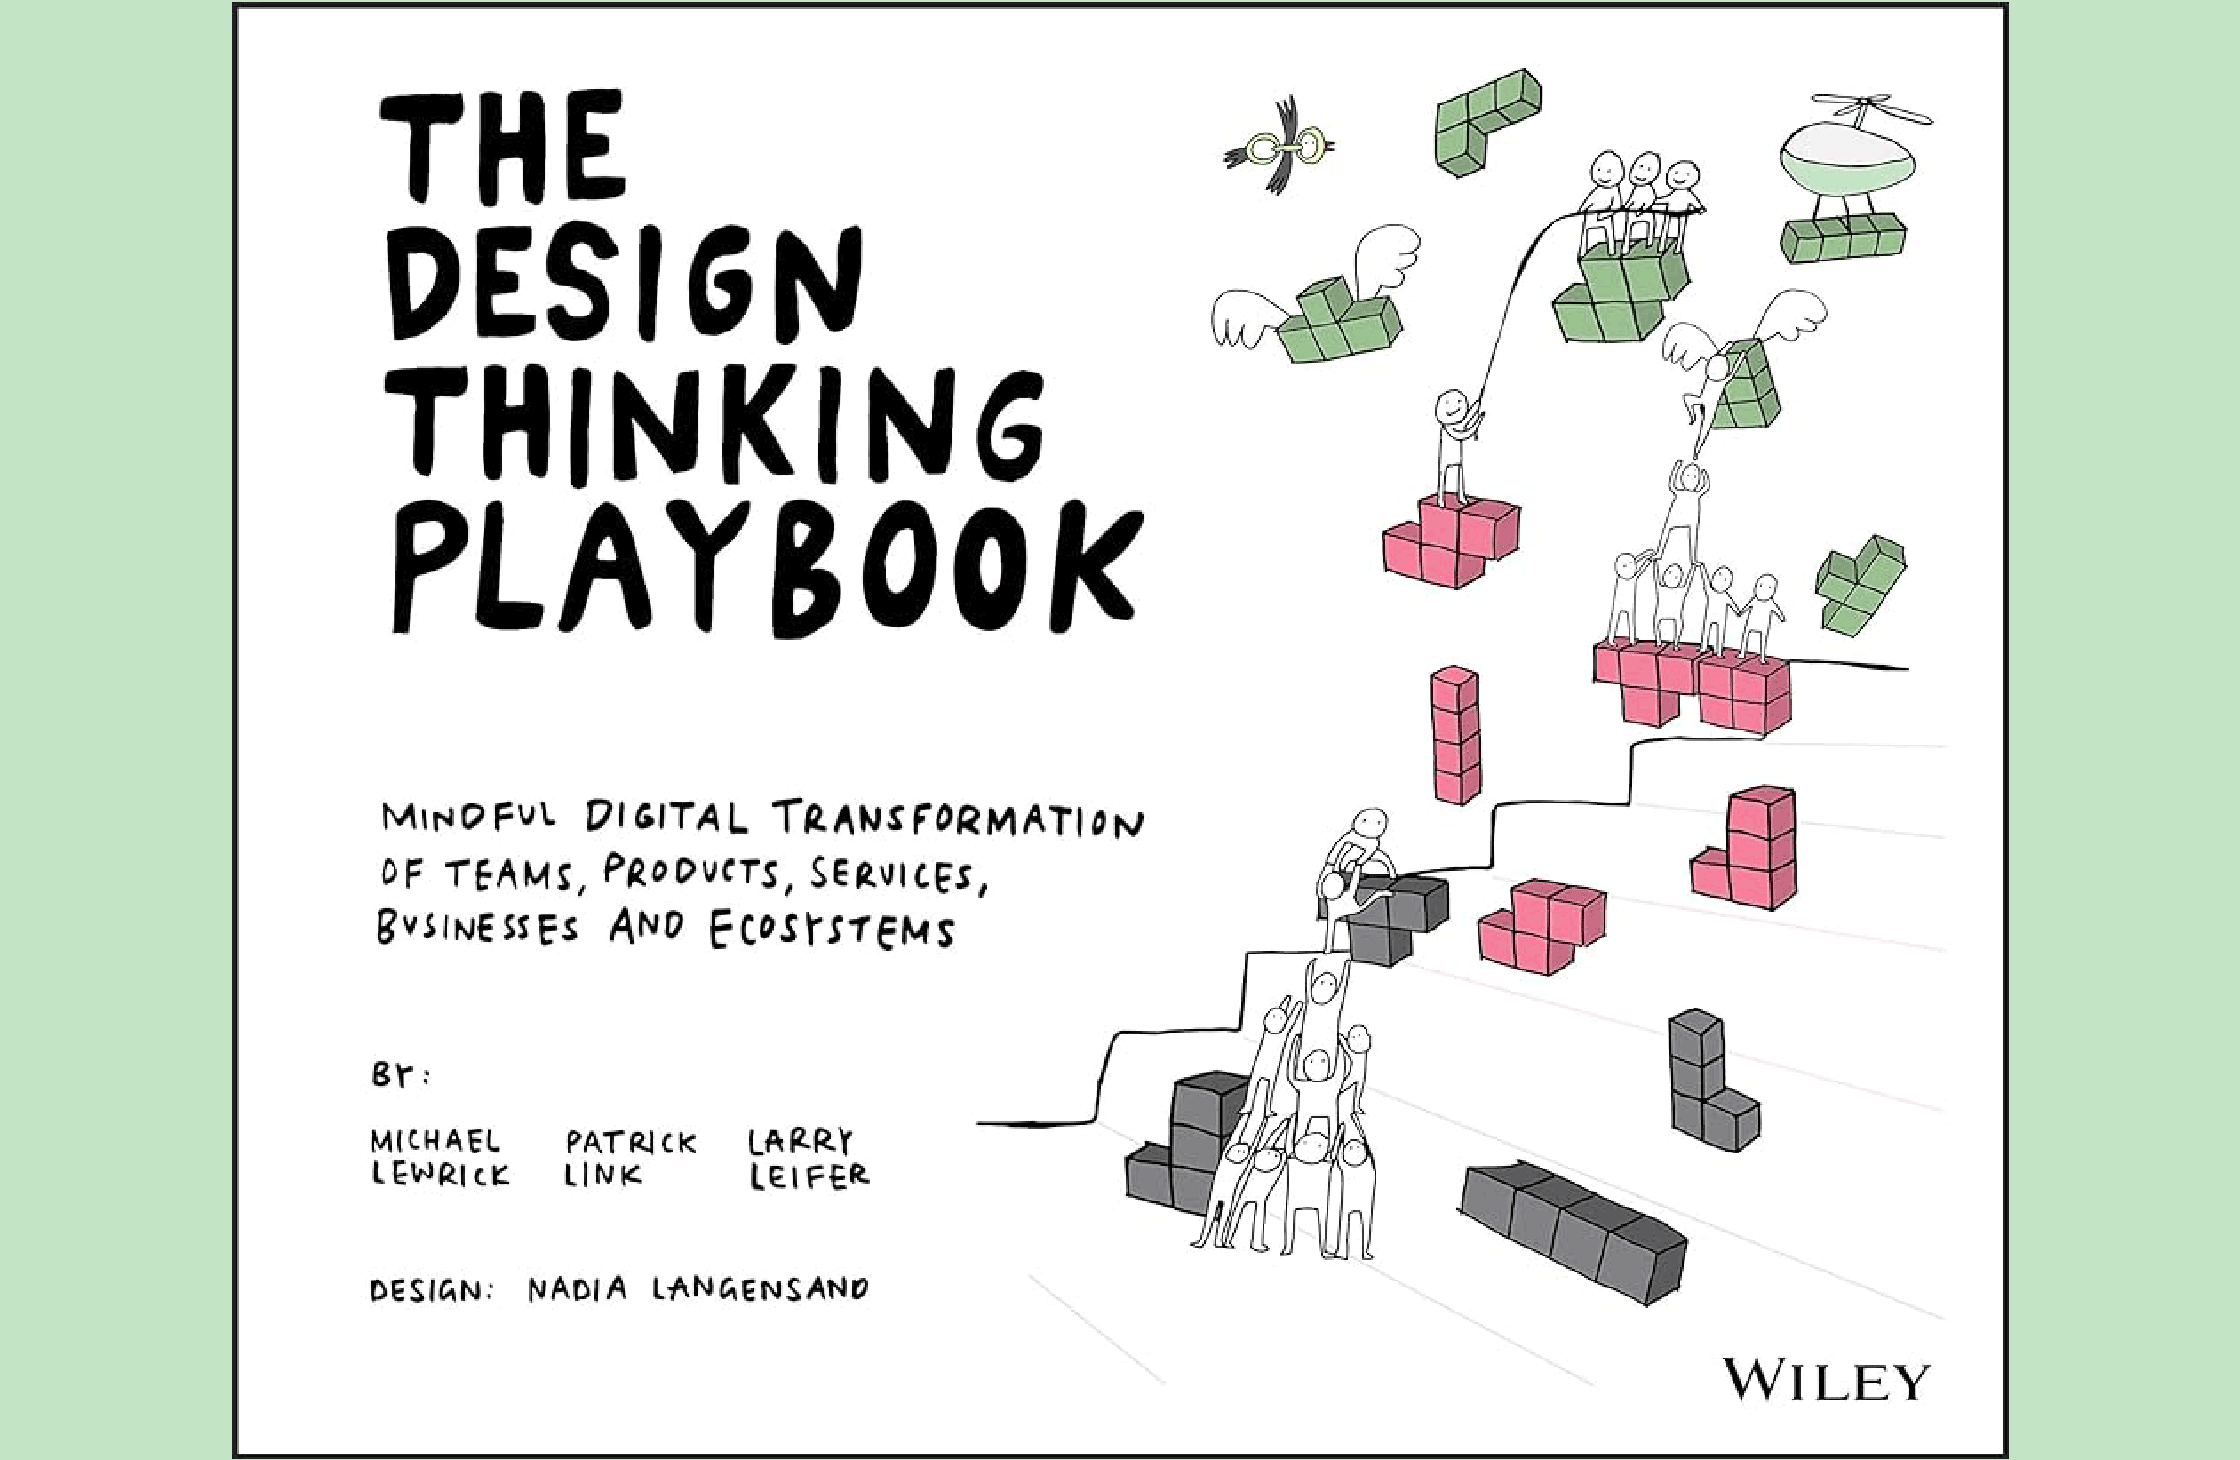 Summary: The Design Thinking Playbook